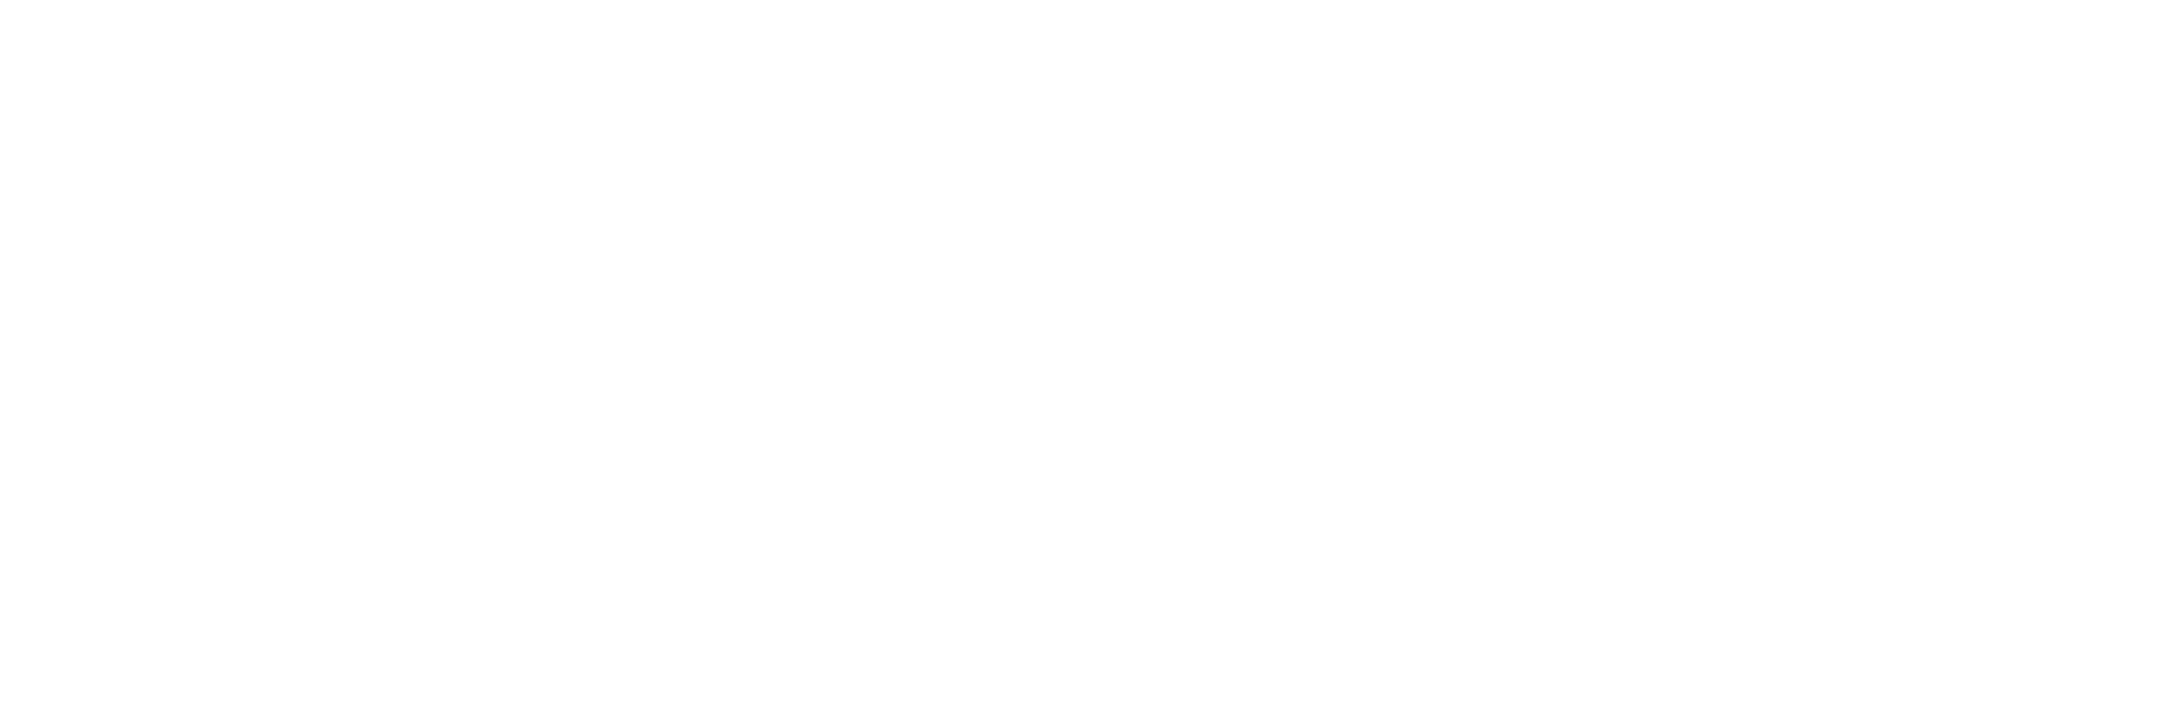 OTRAMS - Travle Technology ERP Platform